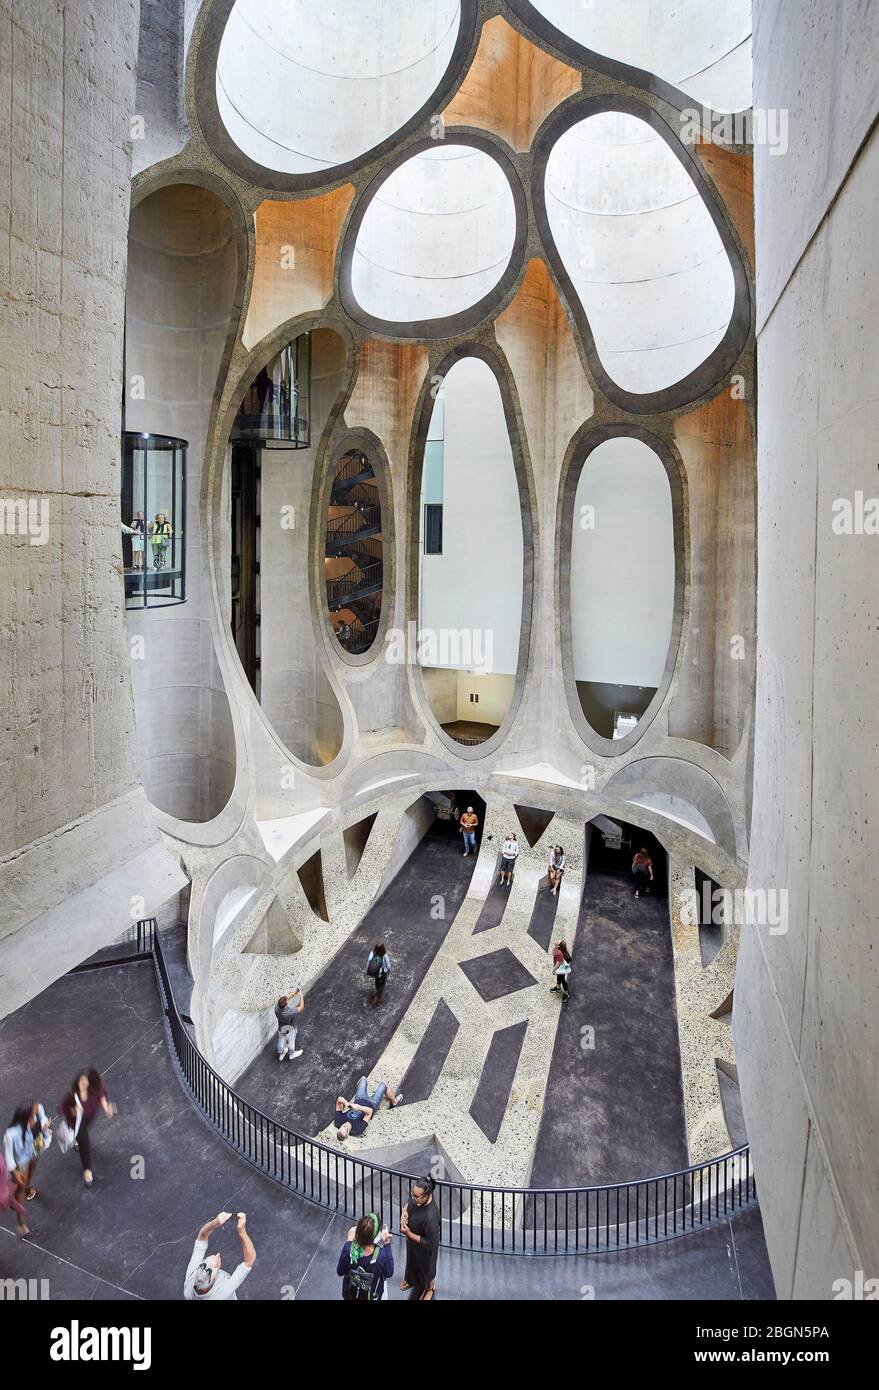 Central atrium with concrete tubes exposing structure. Zeitz MOCAA, Cape Town, South Africa. Architect: Heatherwick Studio, 2017. Stock Photo